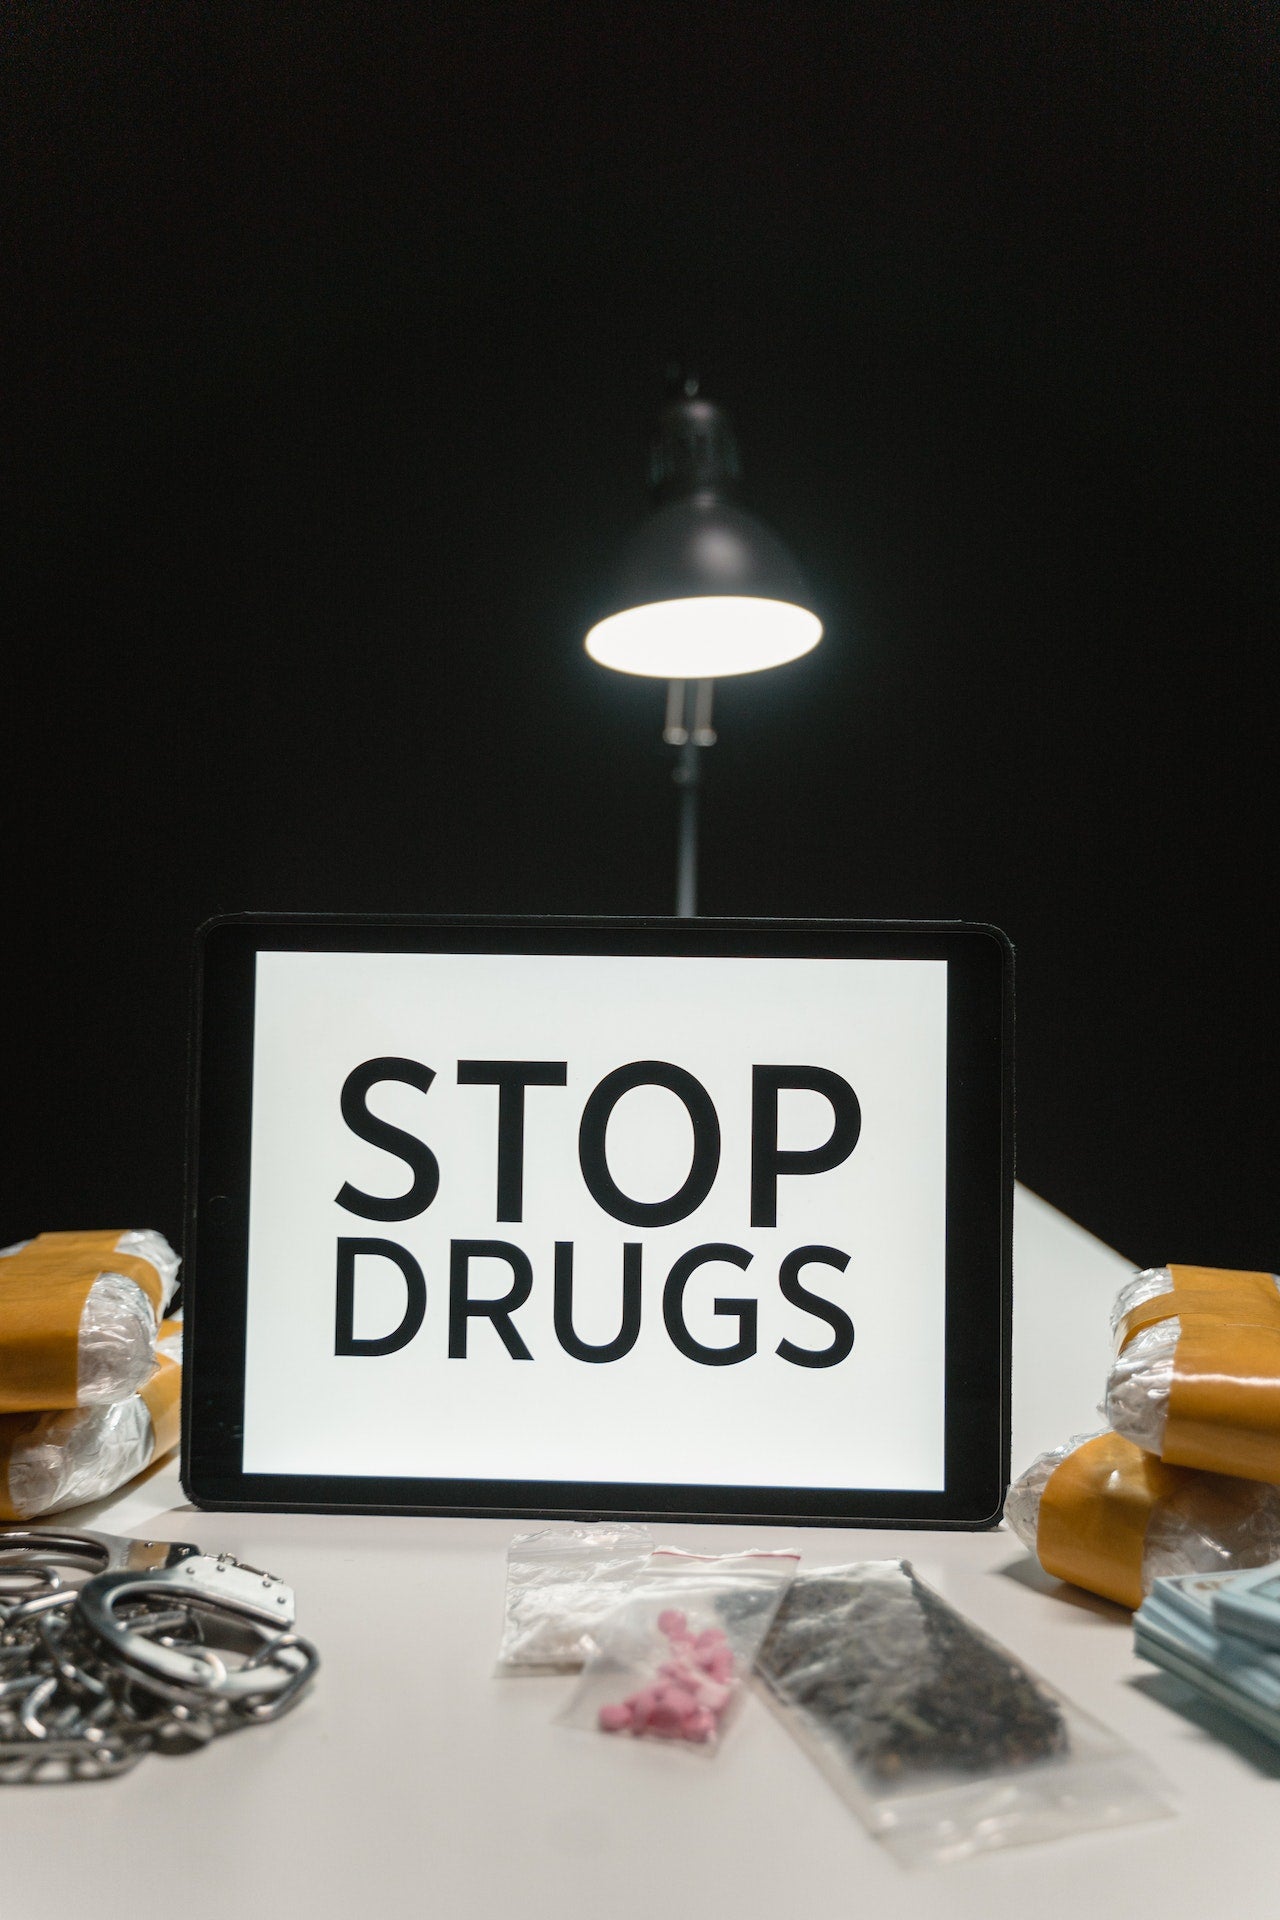 CAN DRUG TESTING KITS UK HELP US INTRODUCE RANDOM DRUG TESTING IN THE WORKPLACE?